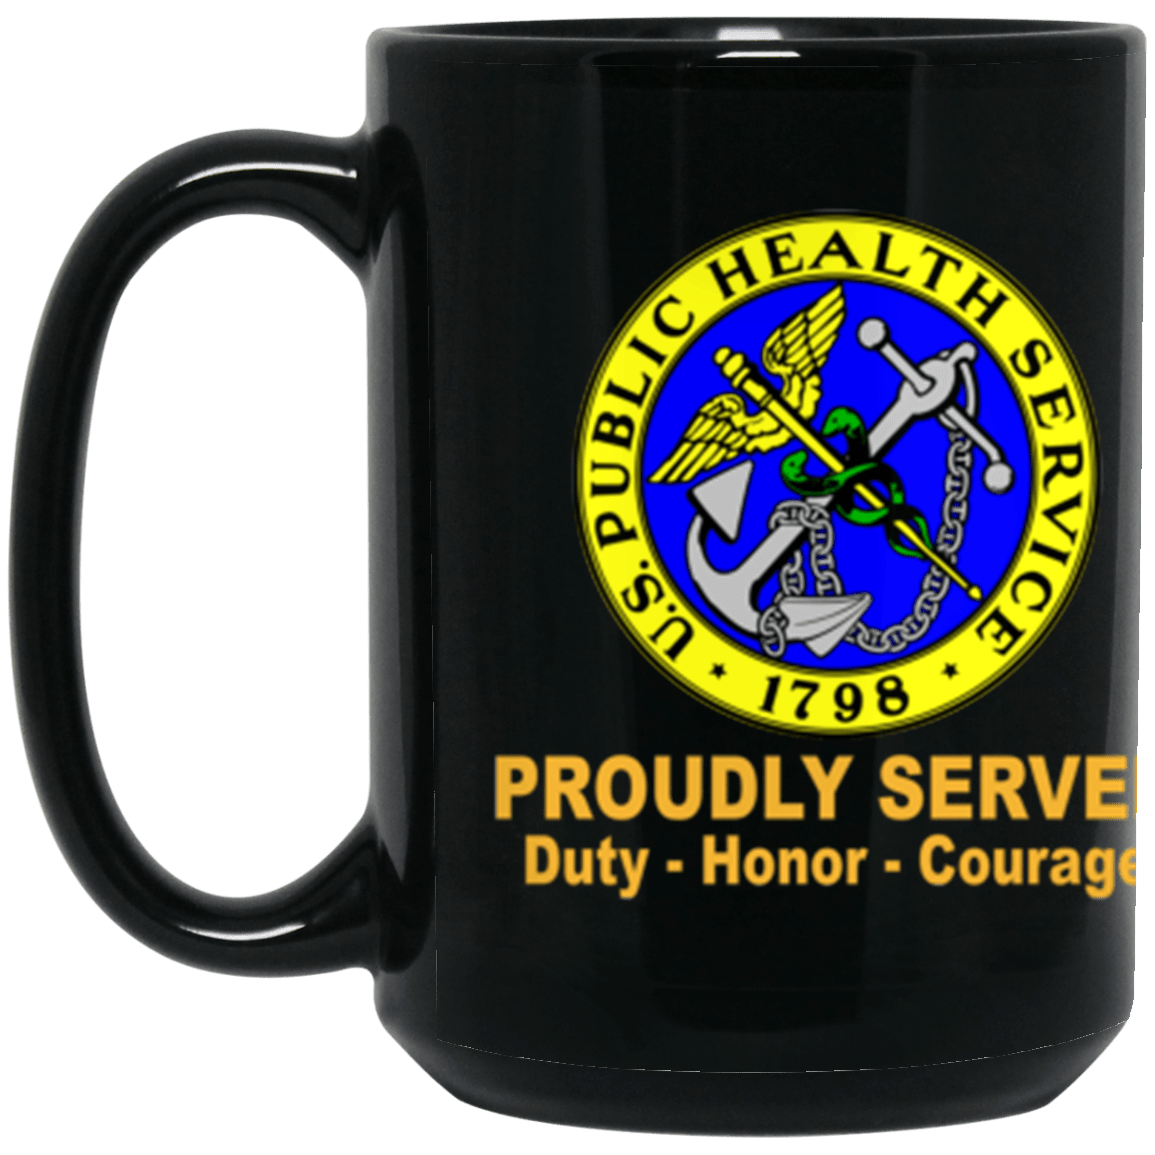 US Army Public Health Service Proudly Served Core Values 15 oz. Black Mug-Drinkware-Veterans Nation